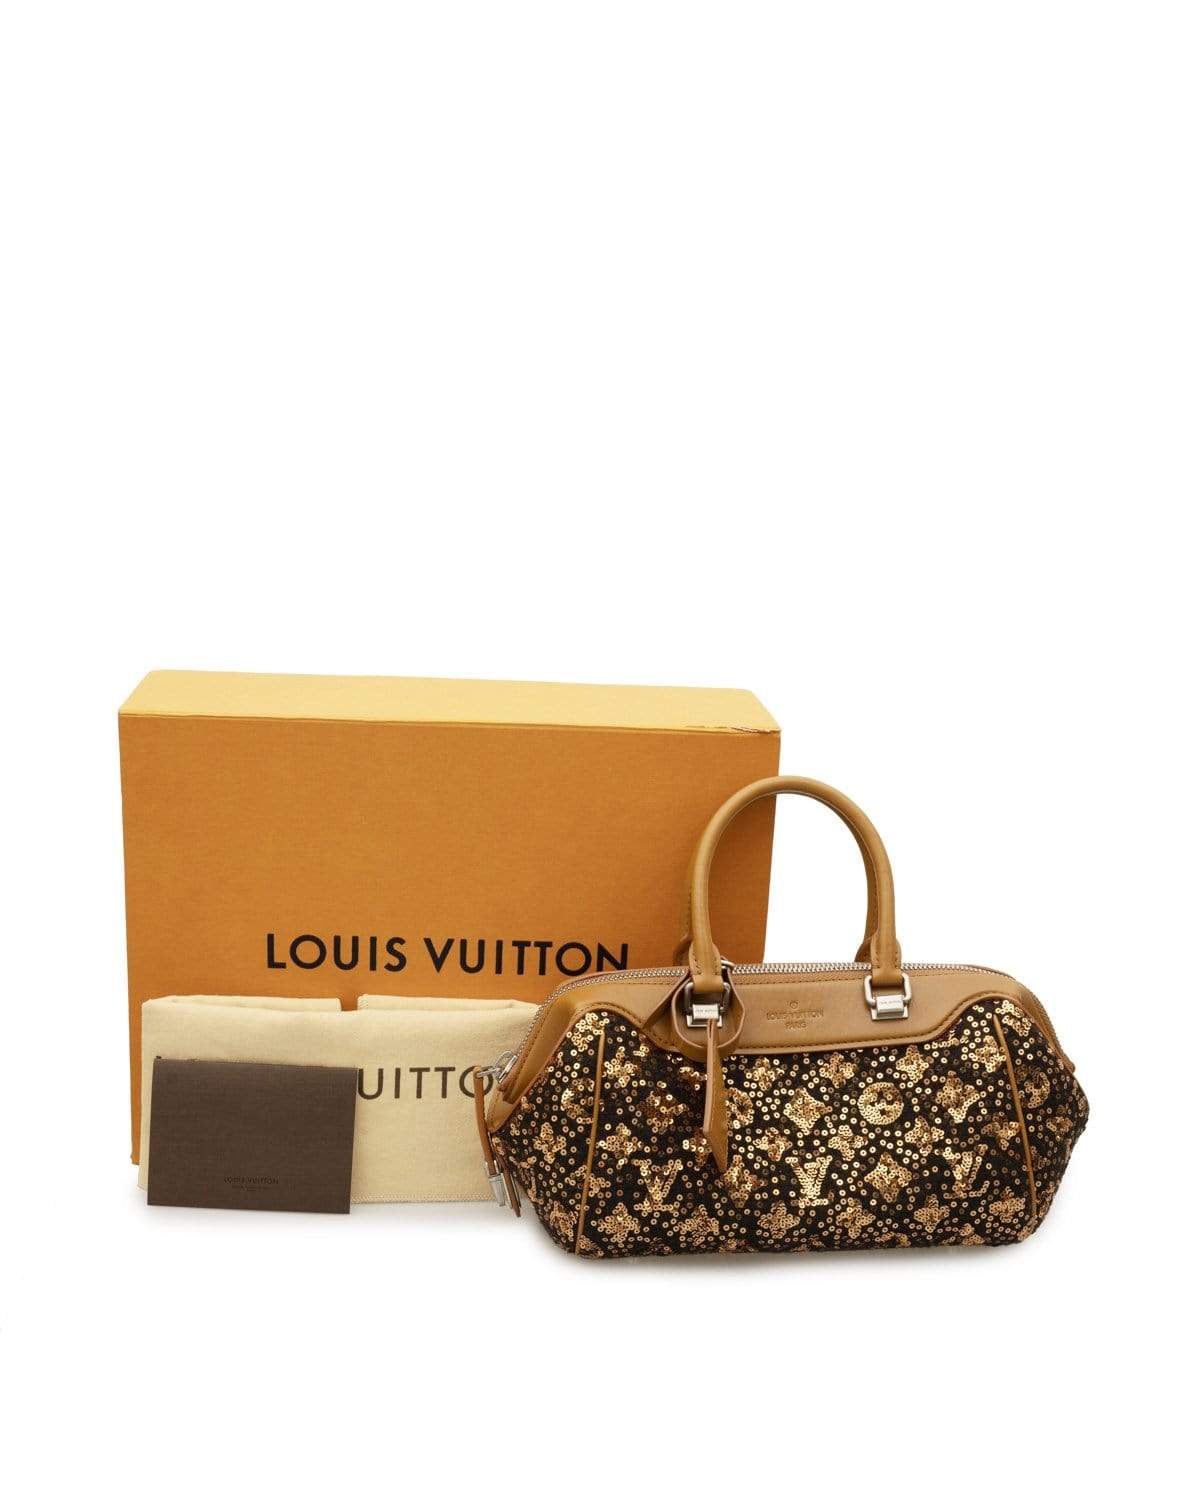 Louis Vuitton Louis Vuitton Ltd. Ed. Sunshine Express Baby Bag - AWL1999